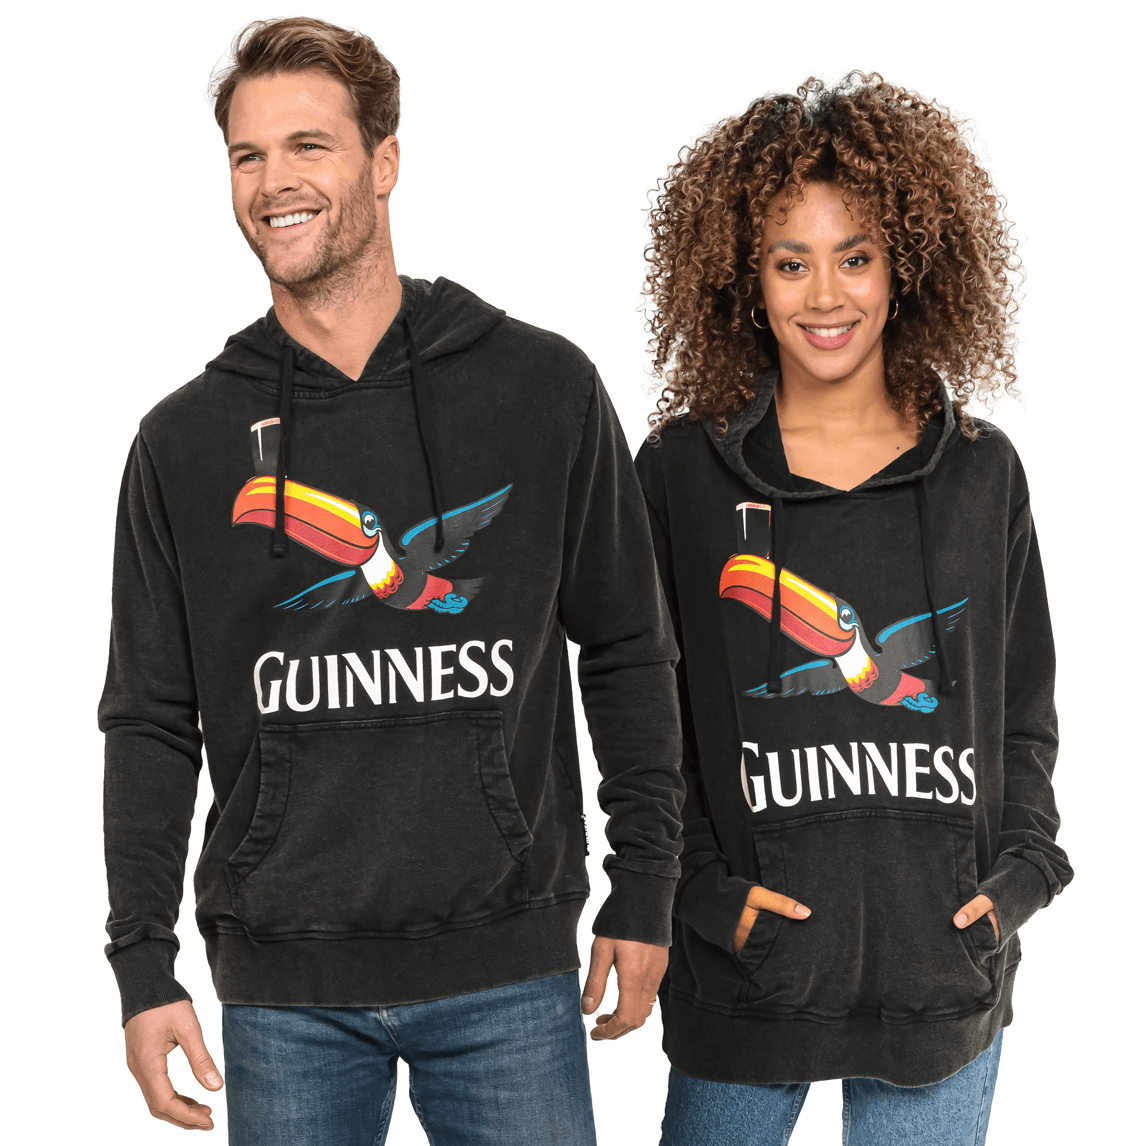 Two people wearing Guinness Premium Label Toucan Hoodies.